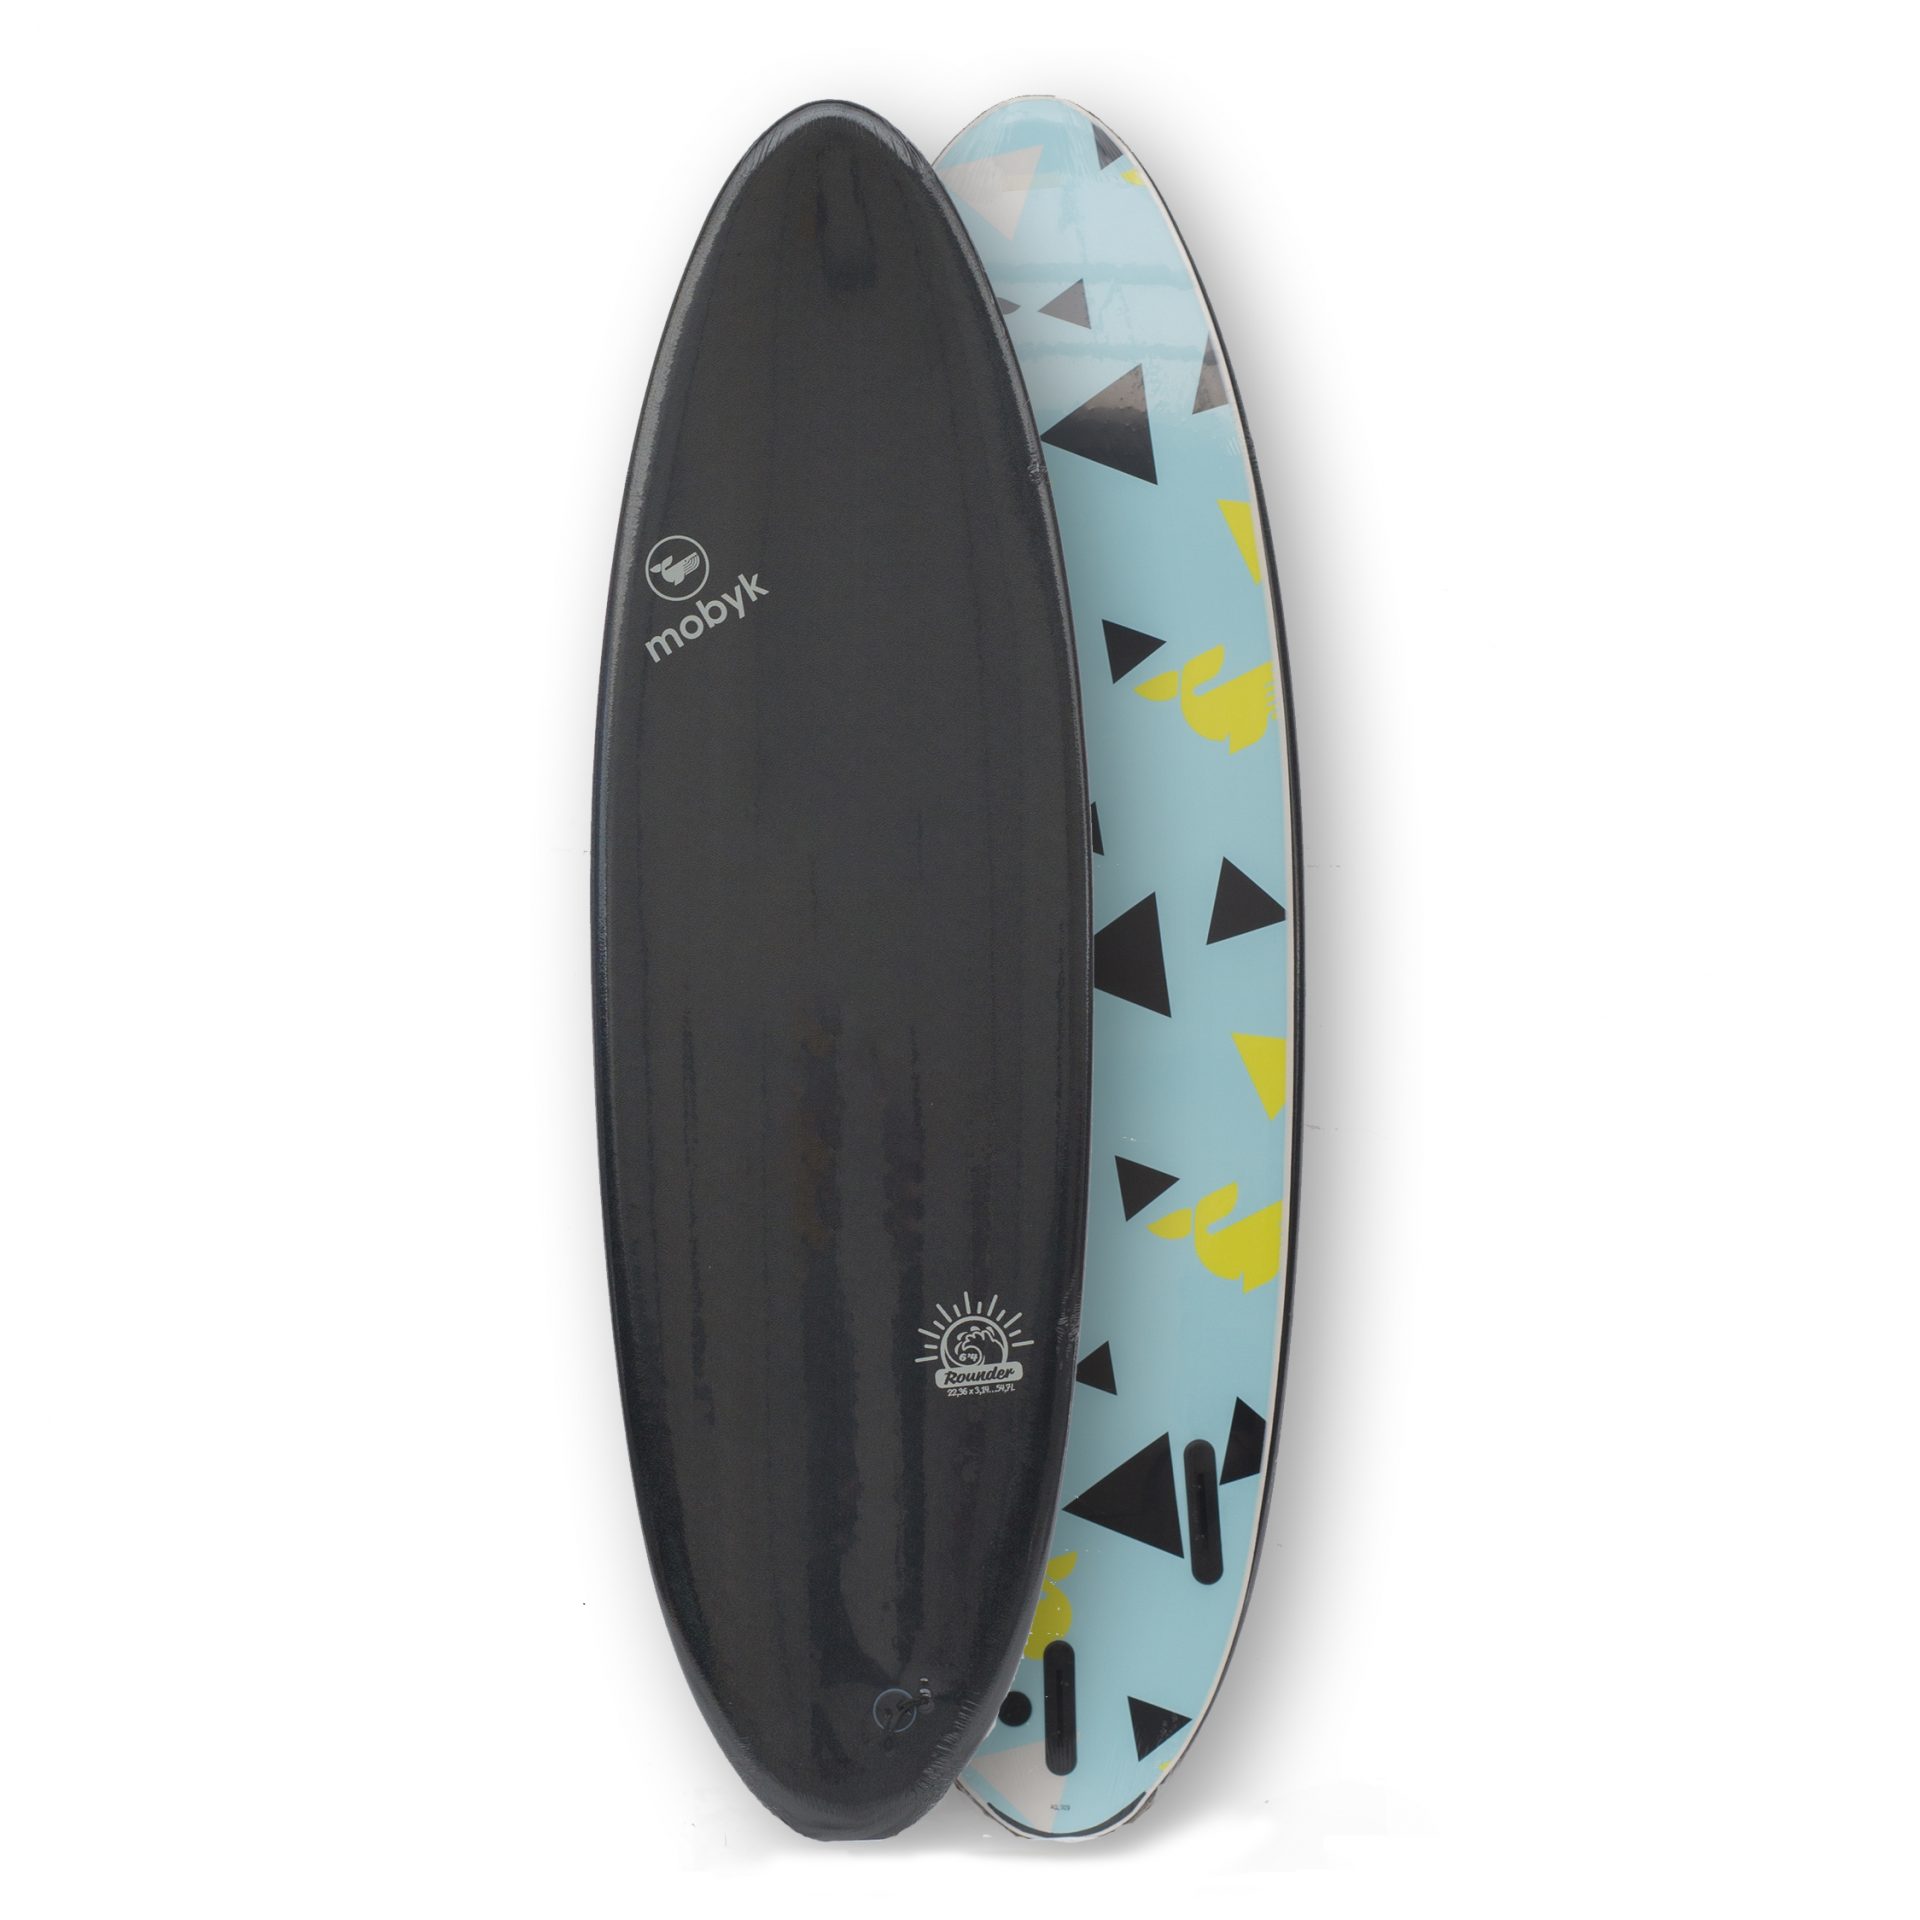 Mobyk surfboards 6´4 black